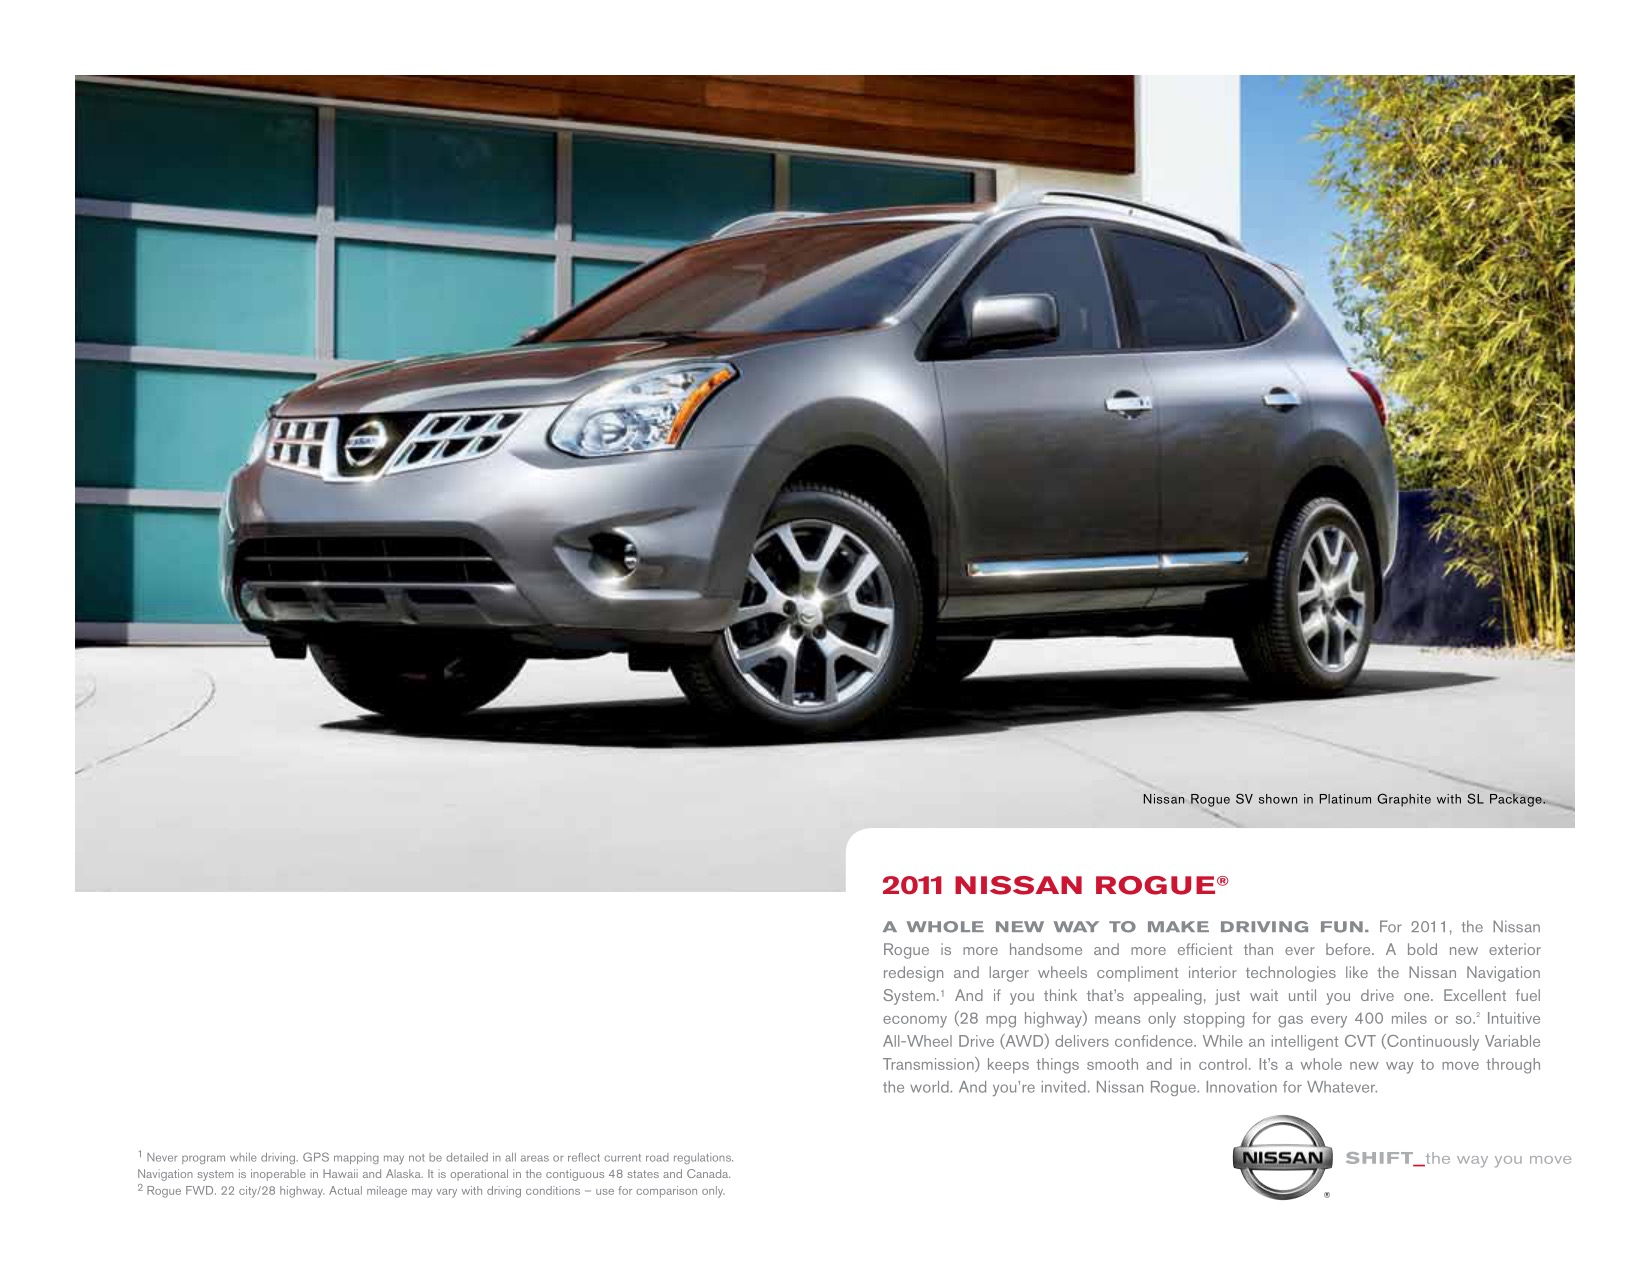 2011 Nissan Rogue Brochure